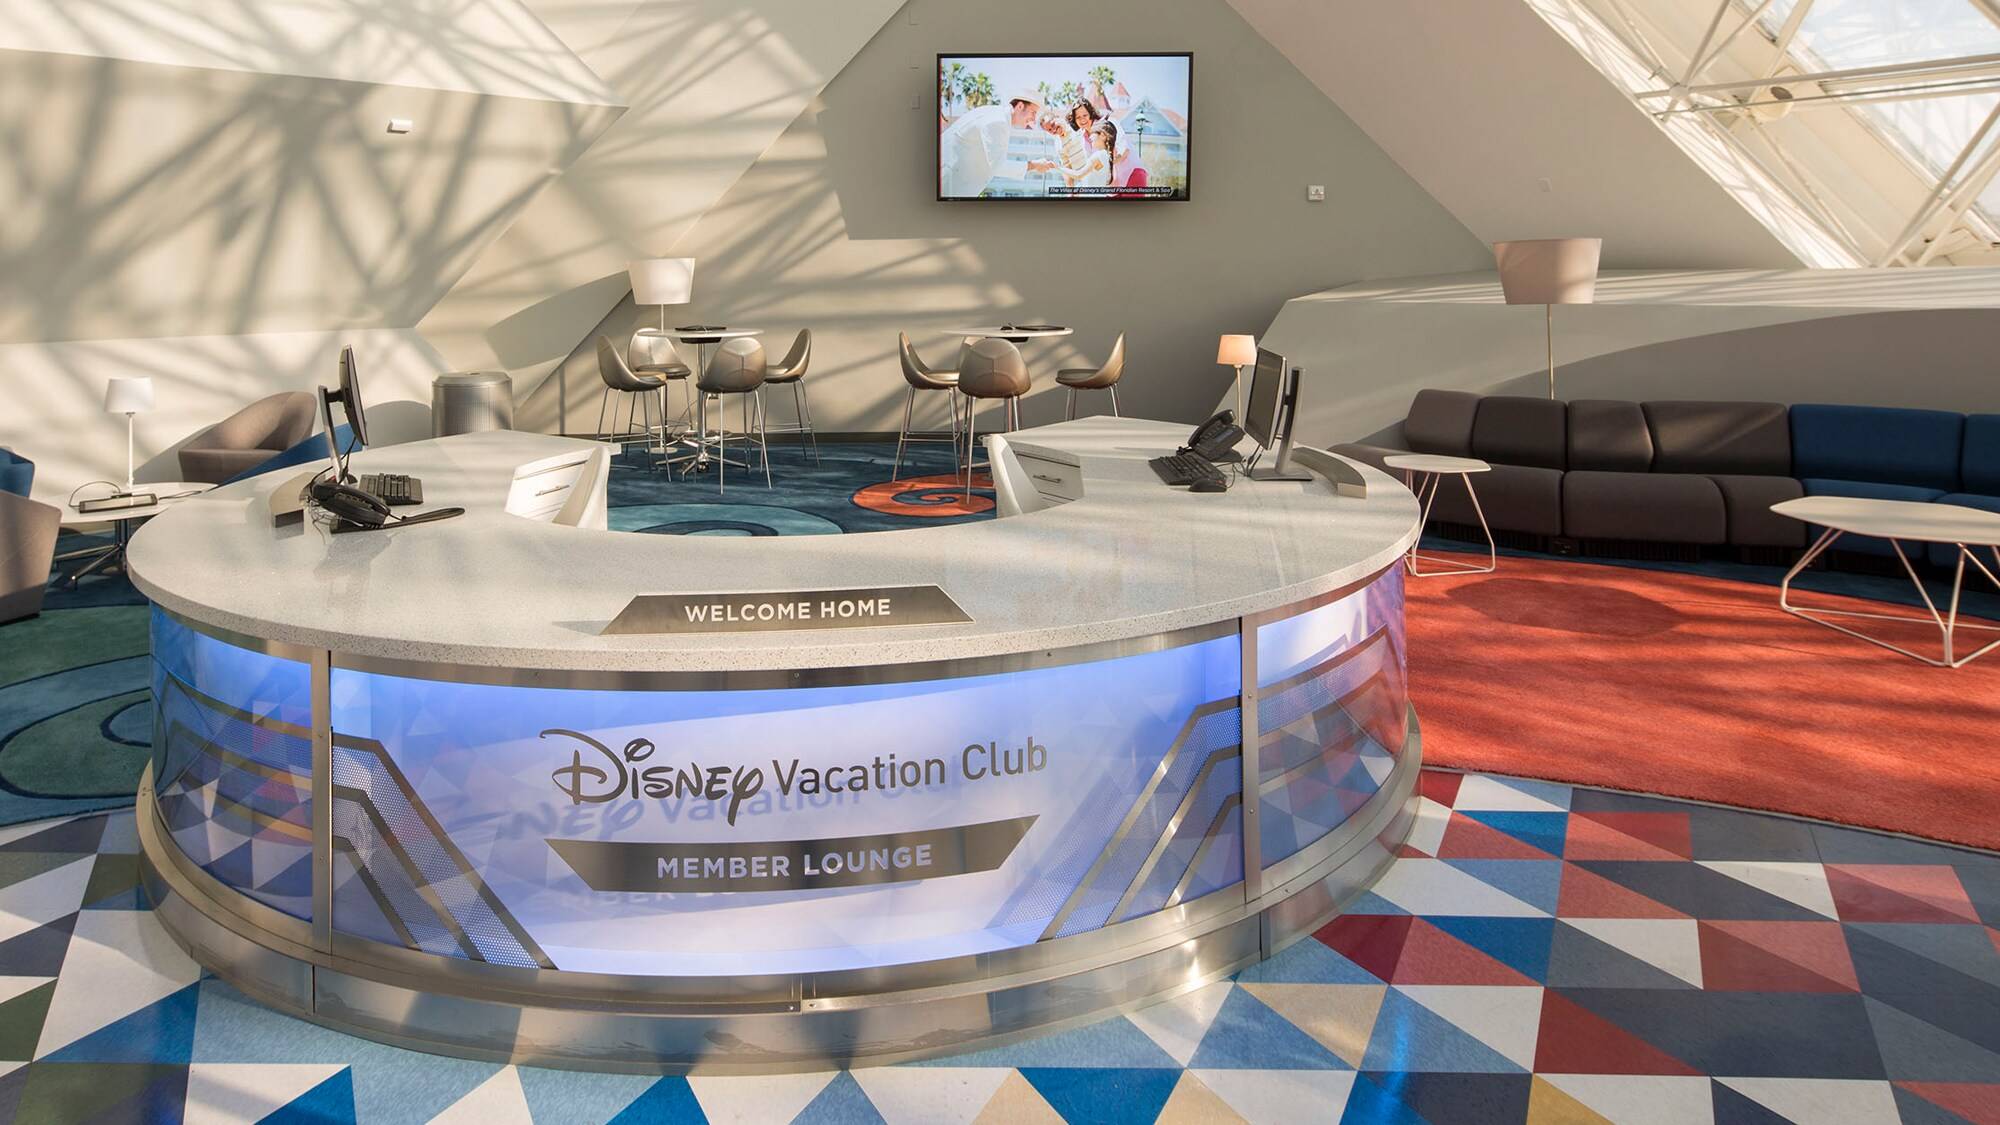 EPCOT's Disney Vacation Club Member Lounge Closing for Refurbishment